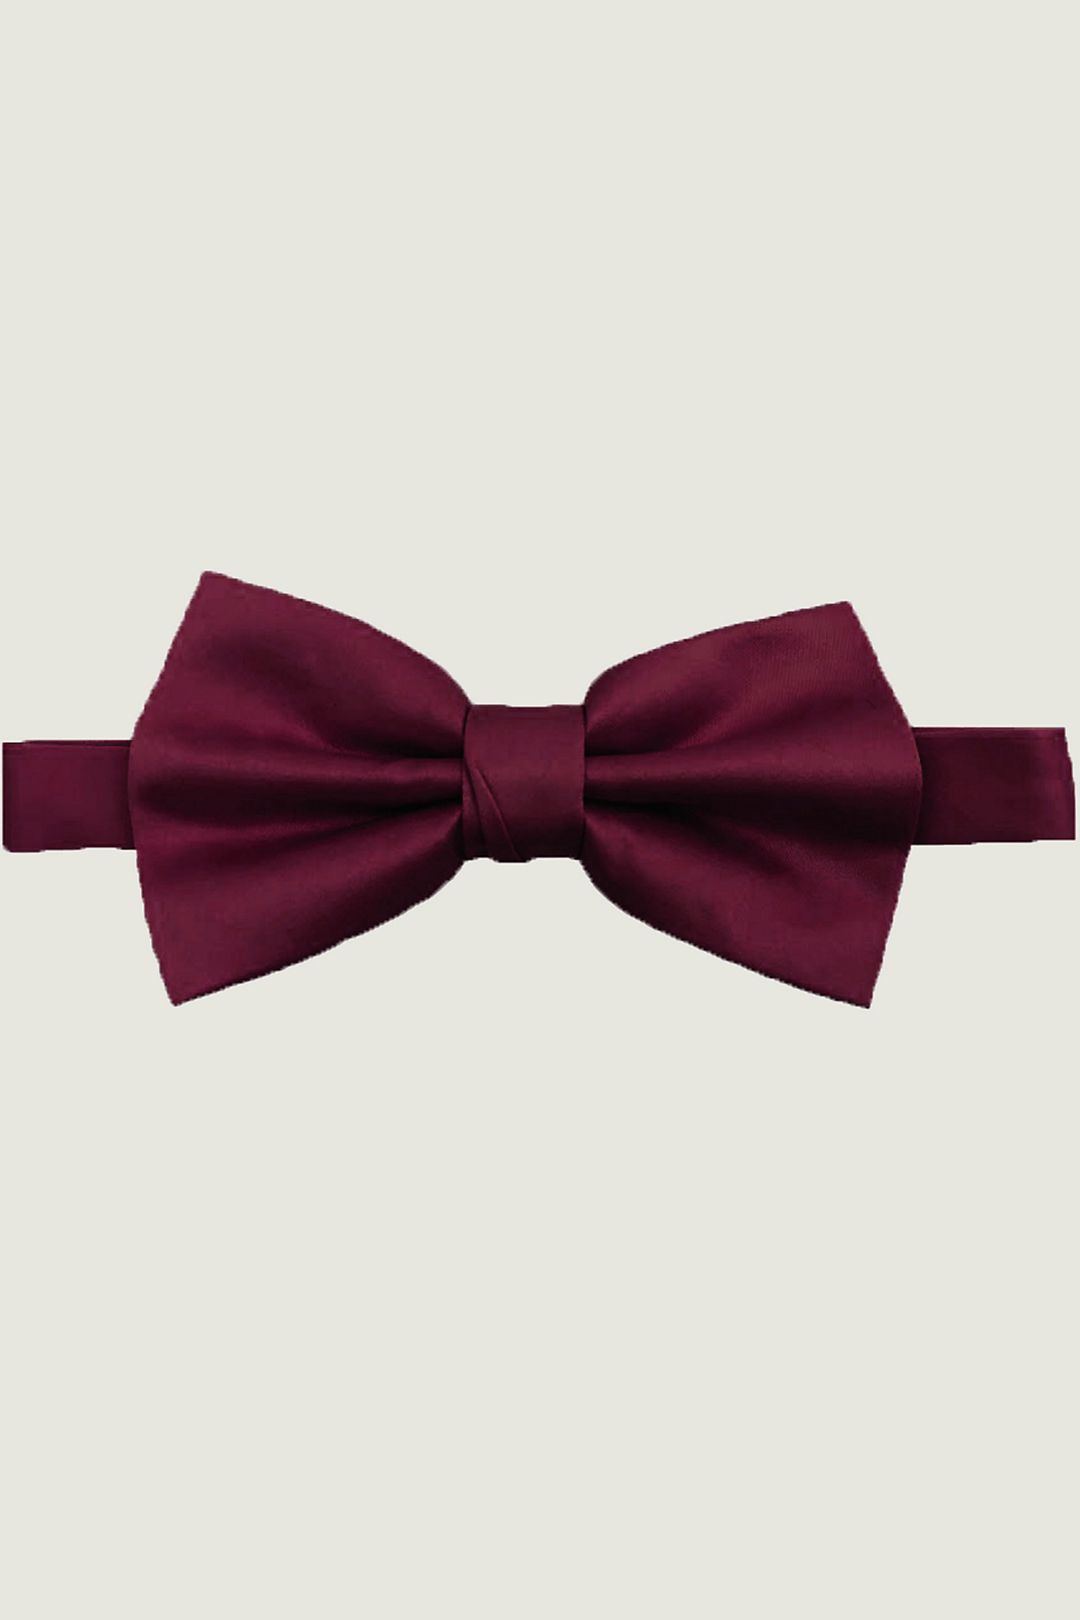 Free Adjustable Luxury Silk Men's Red Tie for Wedding Business